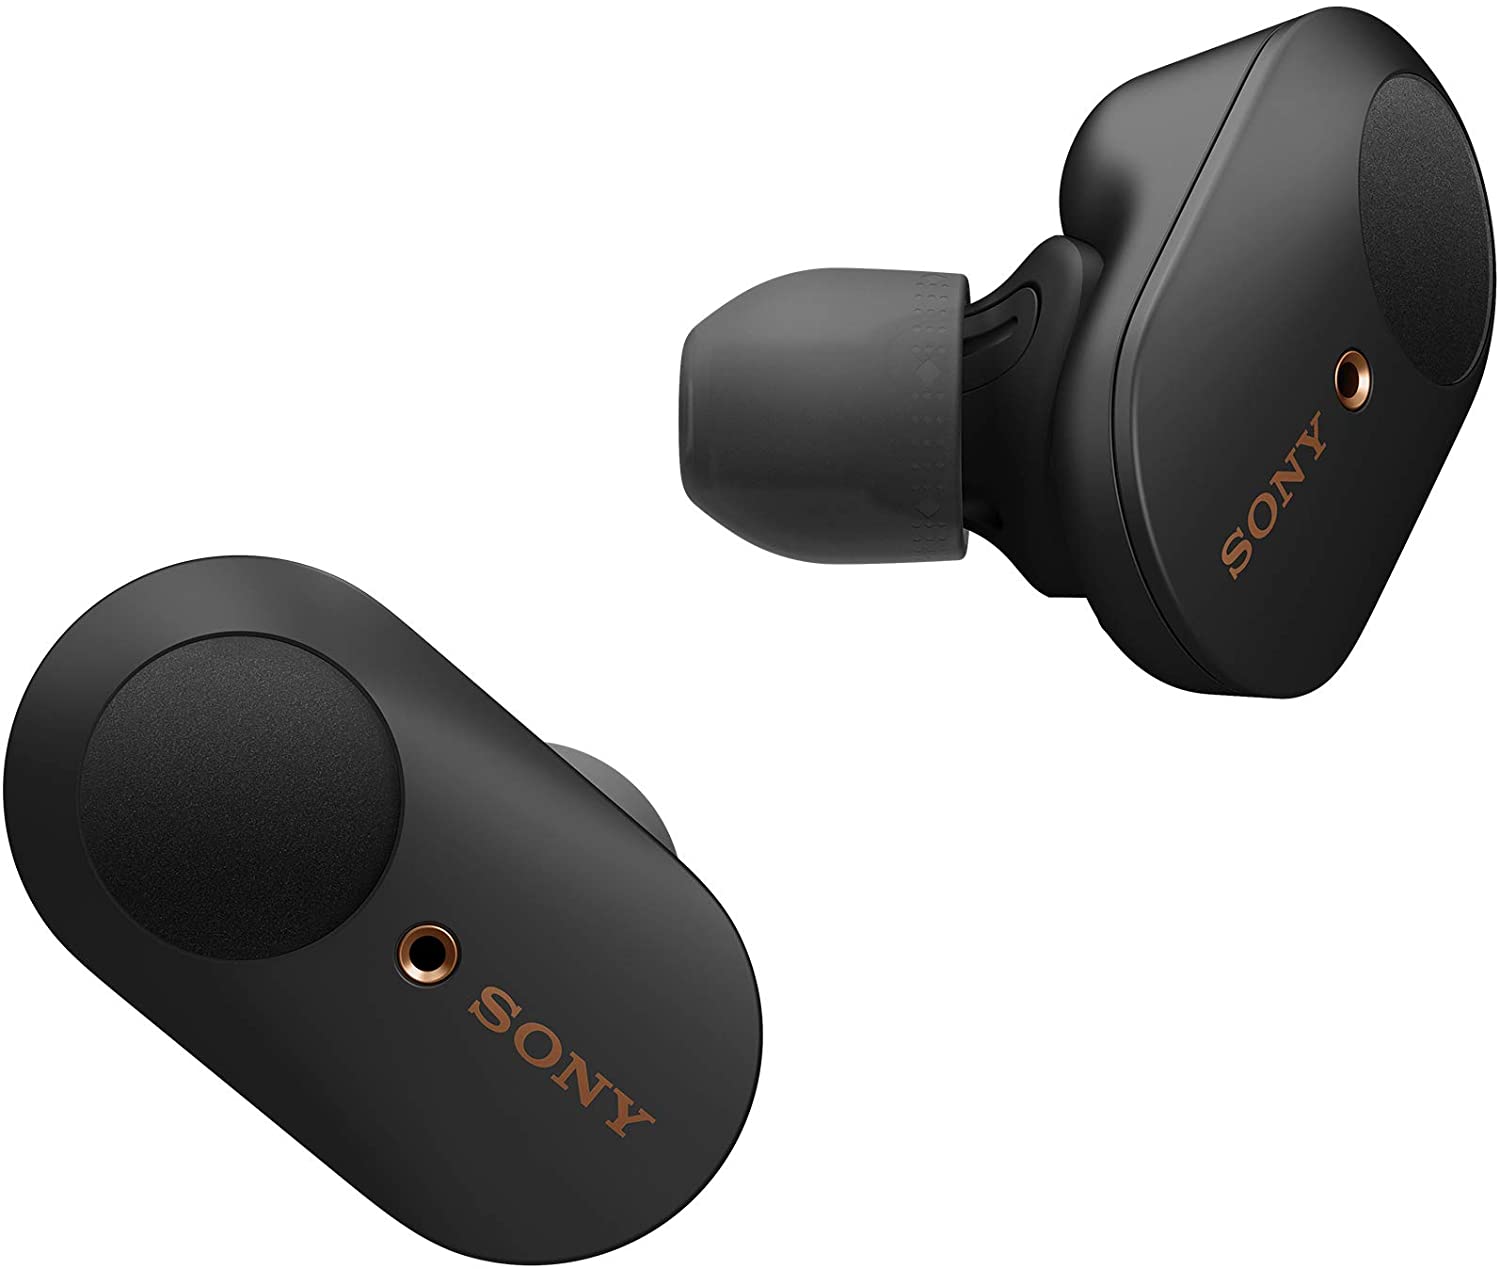 sony-wf-1000xm3b-industry-leading-noise-canceling-truly-wireless-earbuds-black-2021-2-2021-2-18